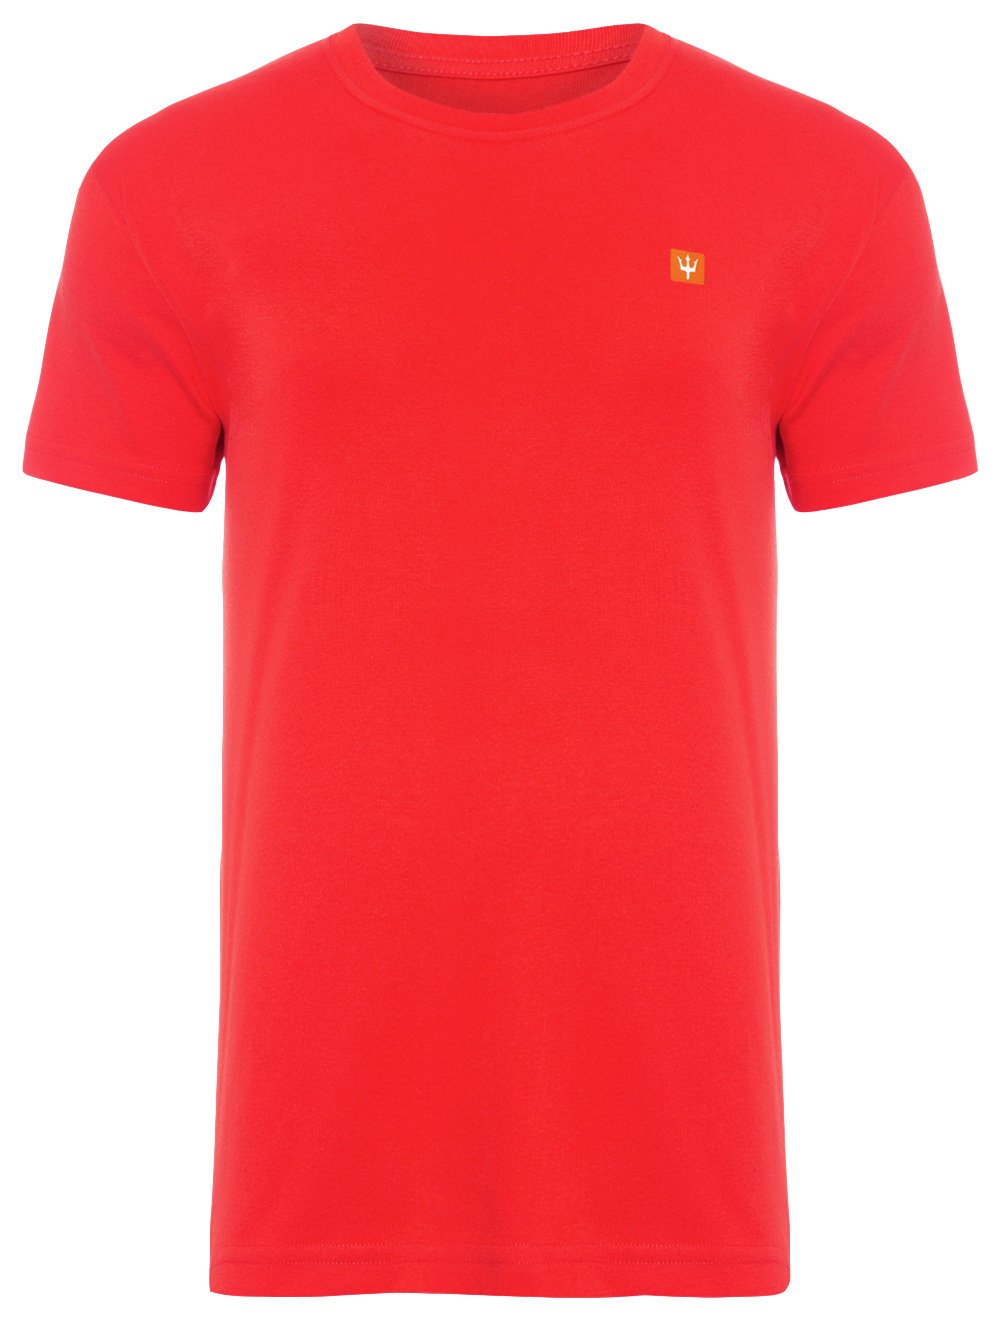 Camiseta Osklen Masculina Regular Vintage Tridente Colors Vermelha